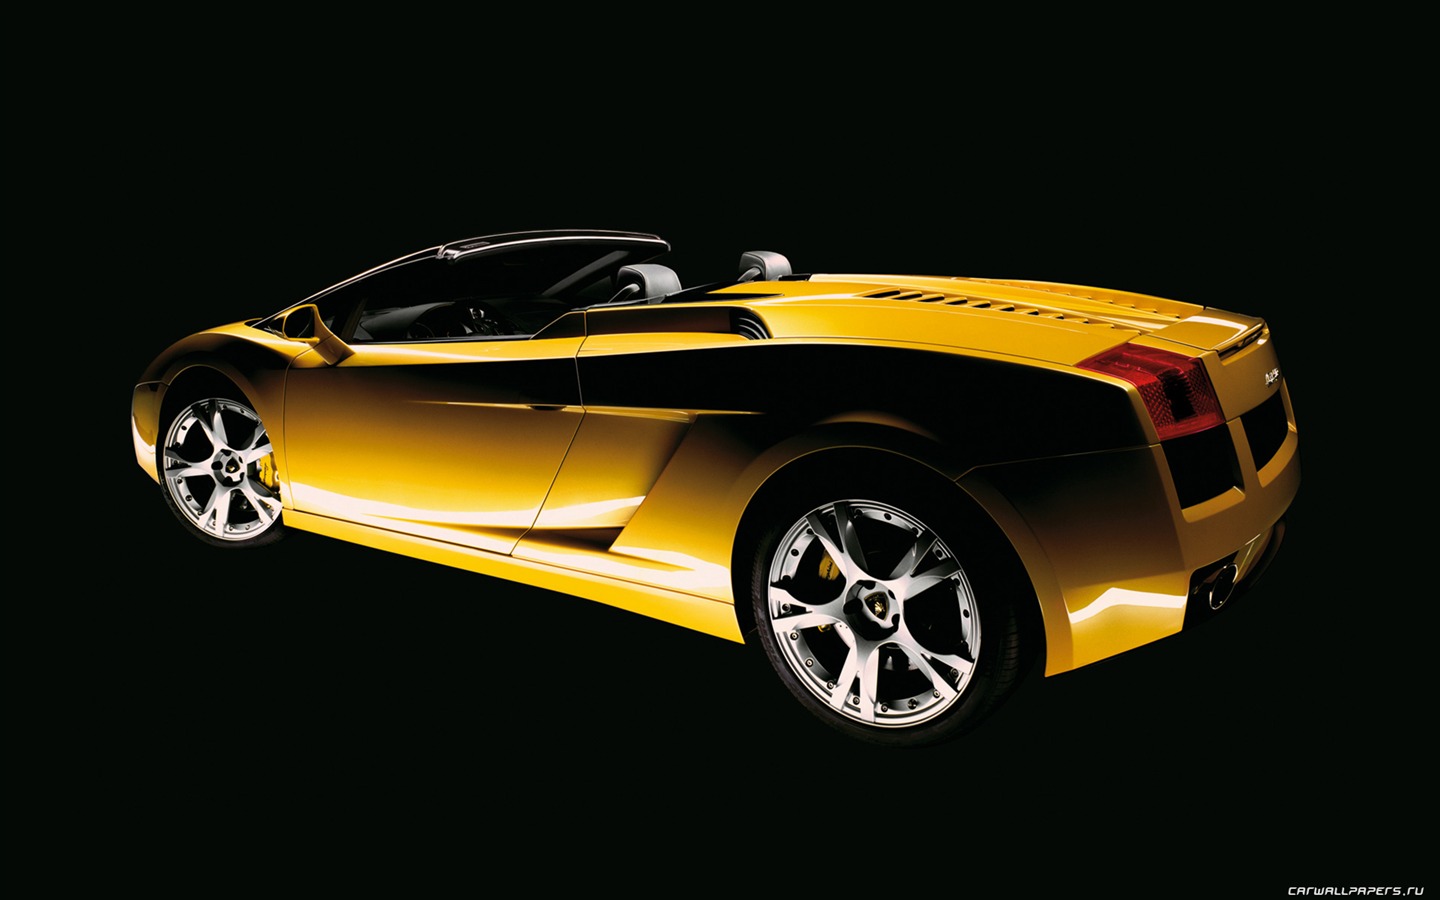 Lamborghini Gallardo Spyder - 2005 蘭博基尼 #4 - 1440x900